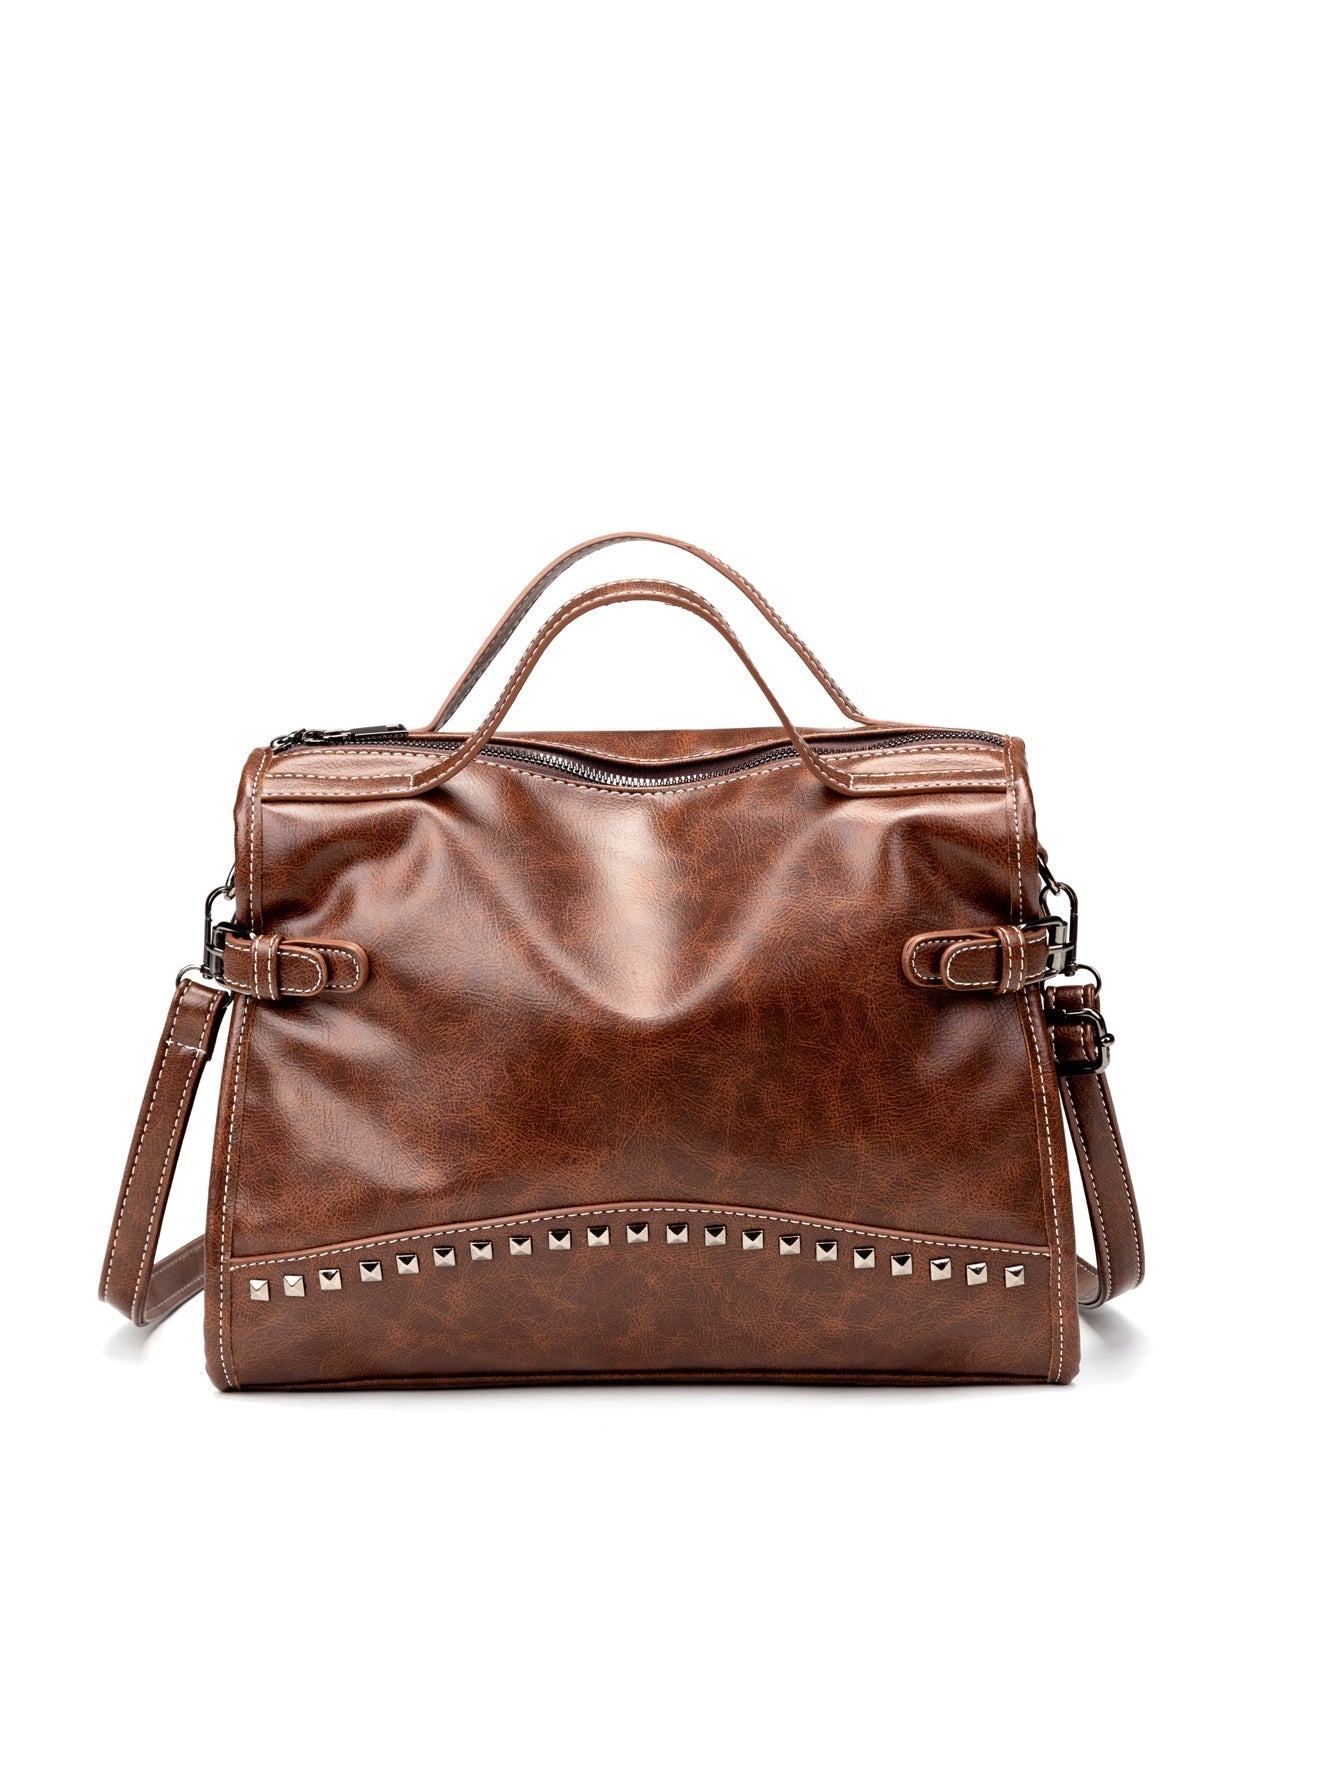 Women Tote Shoulder Bag Large Top Handle Satchel Bag Soft Faux Leather Hobo Bag Roomy Purse and Handbag Sai Feel